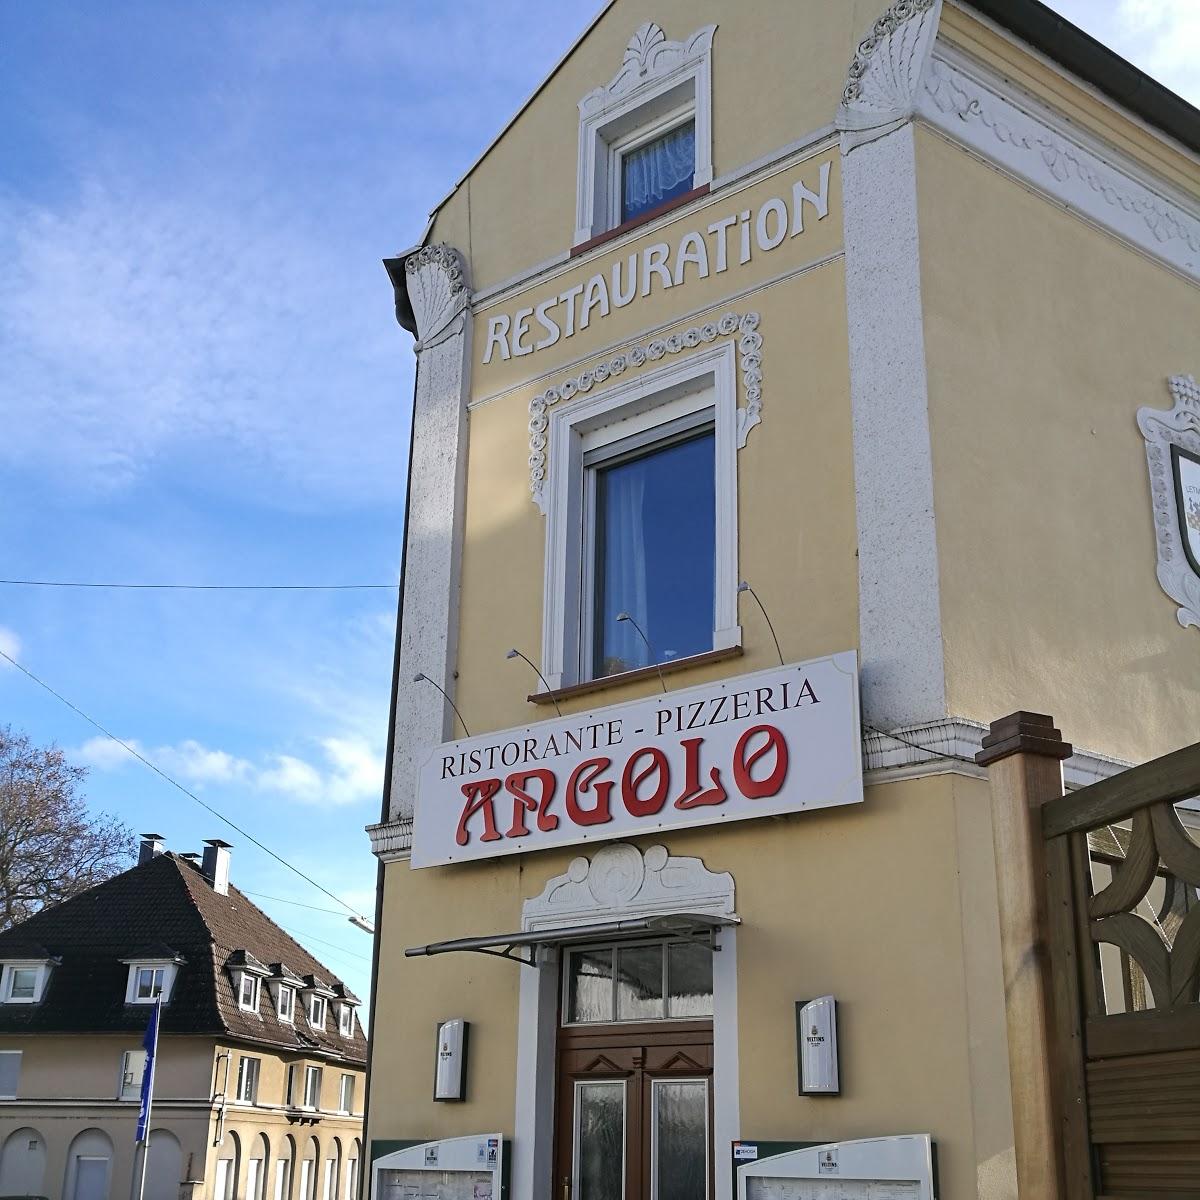 Restaurant "Ristorante Pizzeria Angolo" in Iserlohn